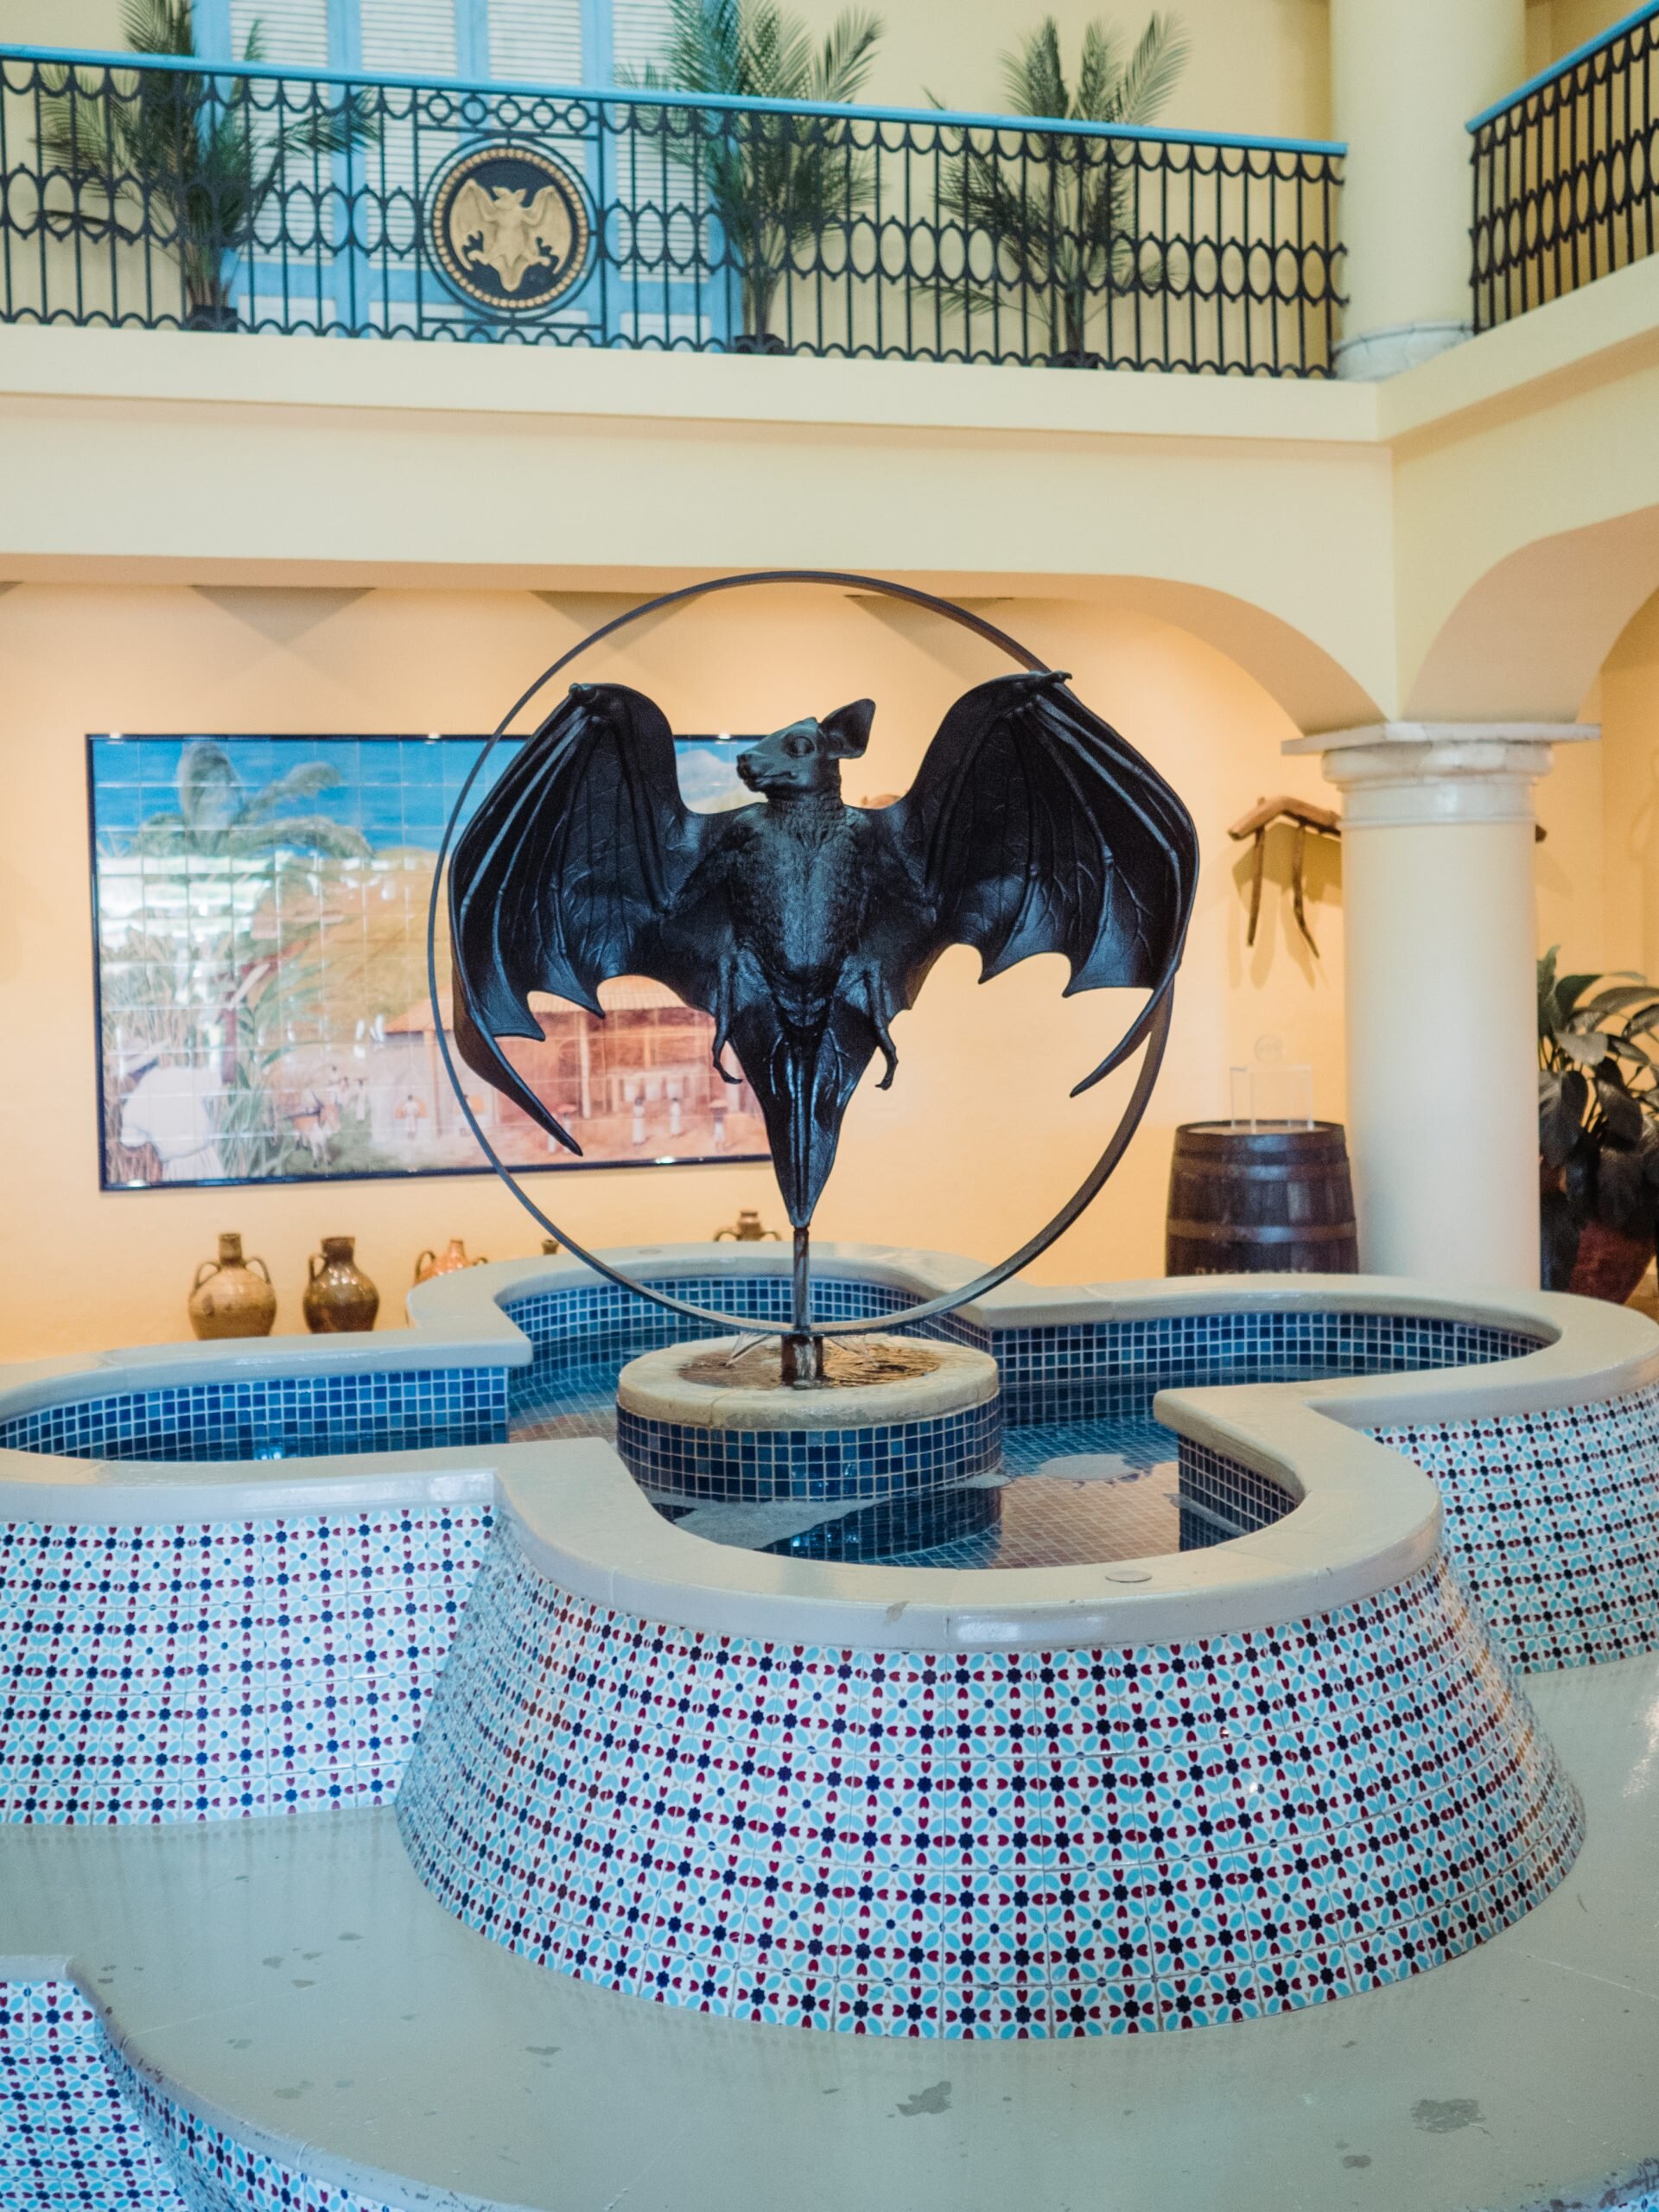 Inside Casa Bacardi with rum bat in a water fountain